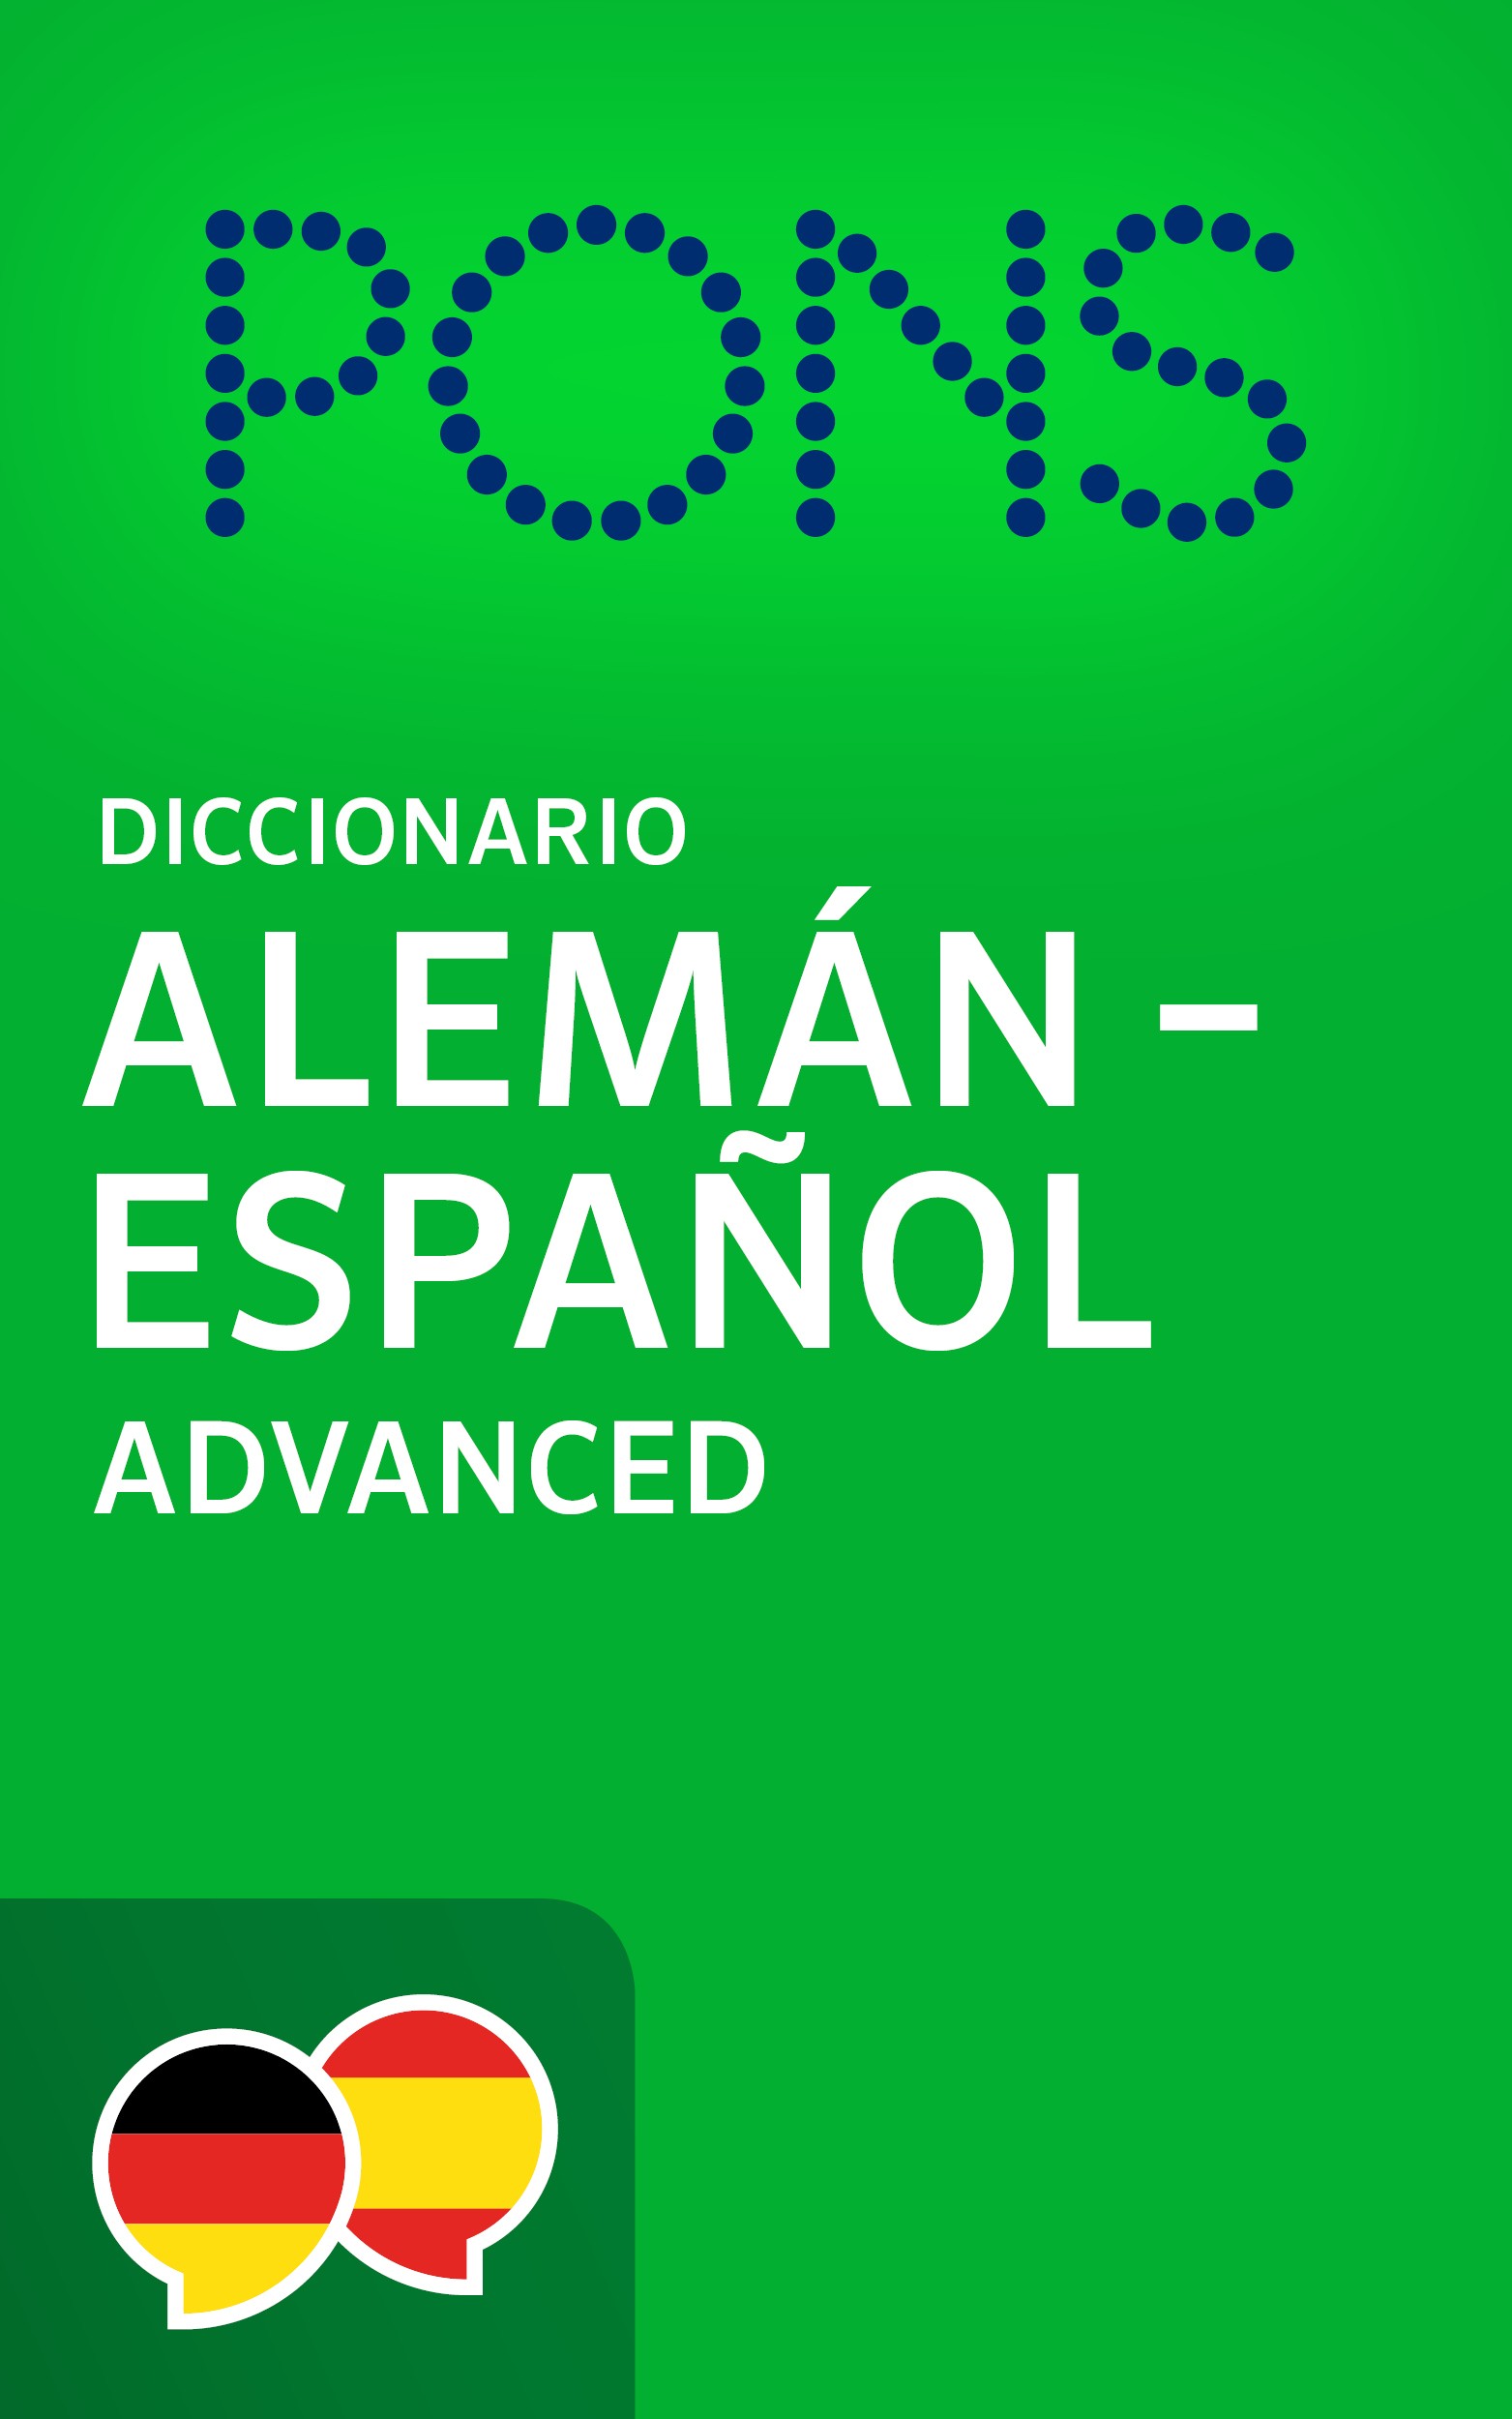 E-Book: PONS Diccionario Alemán -> Español Advanced